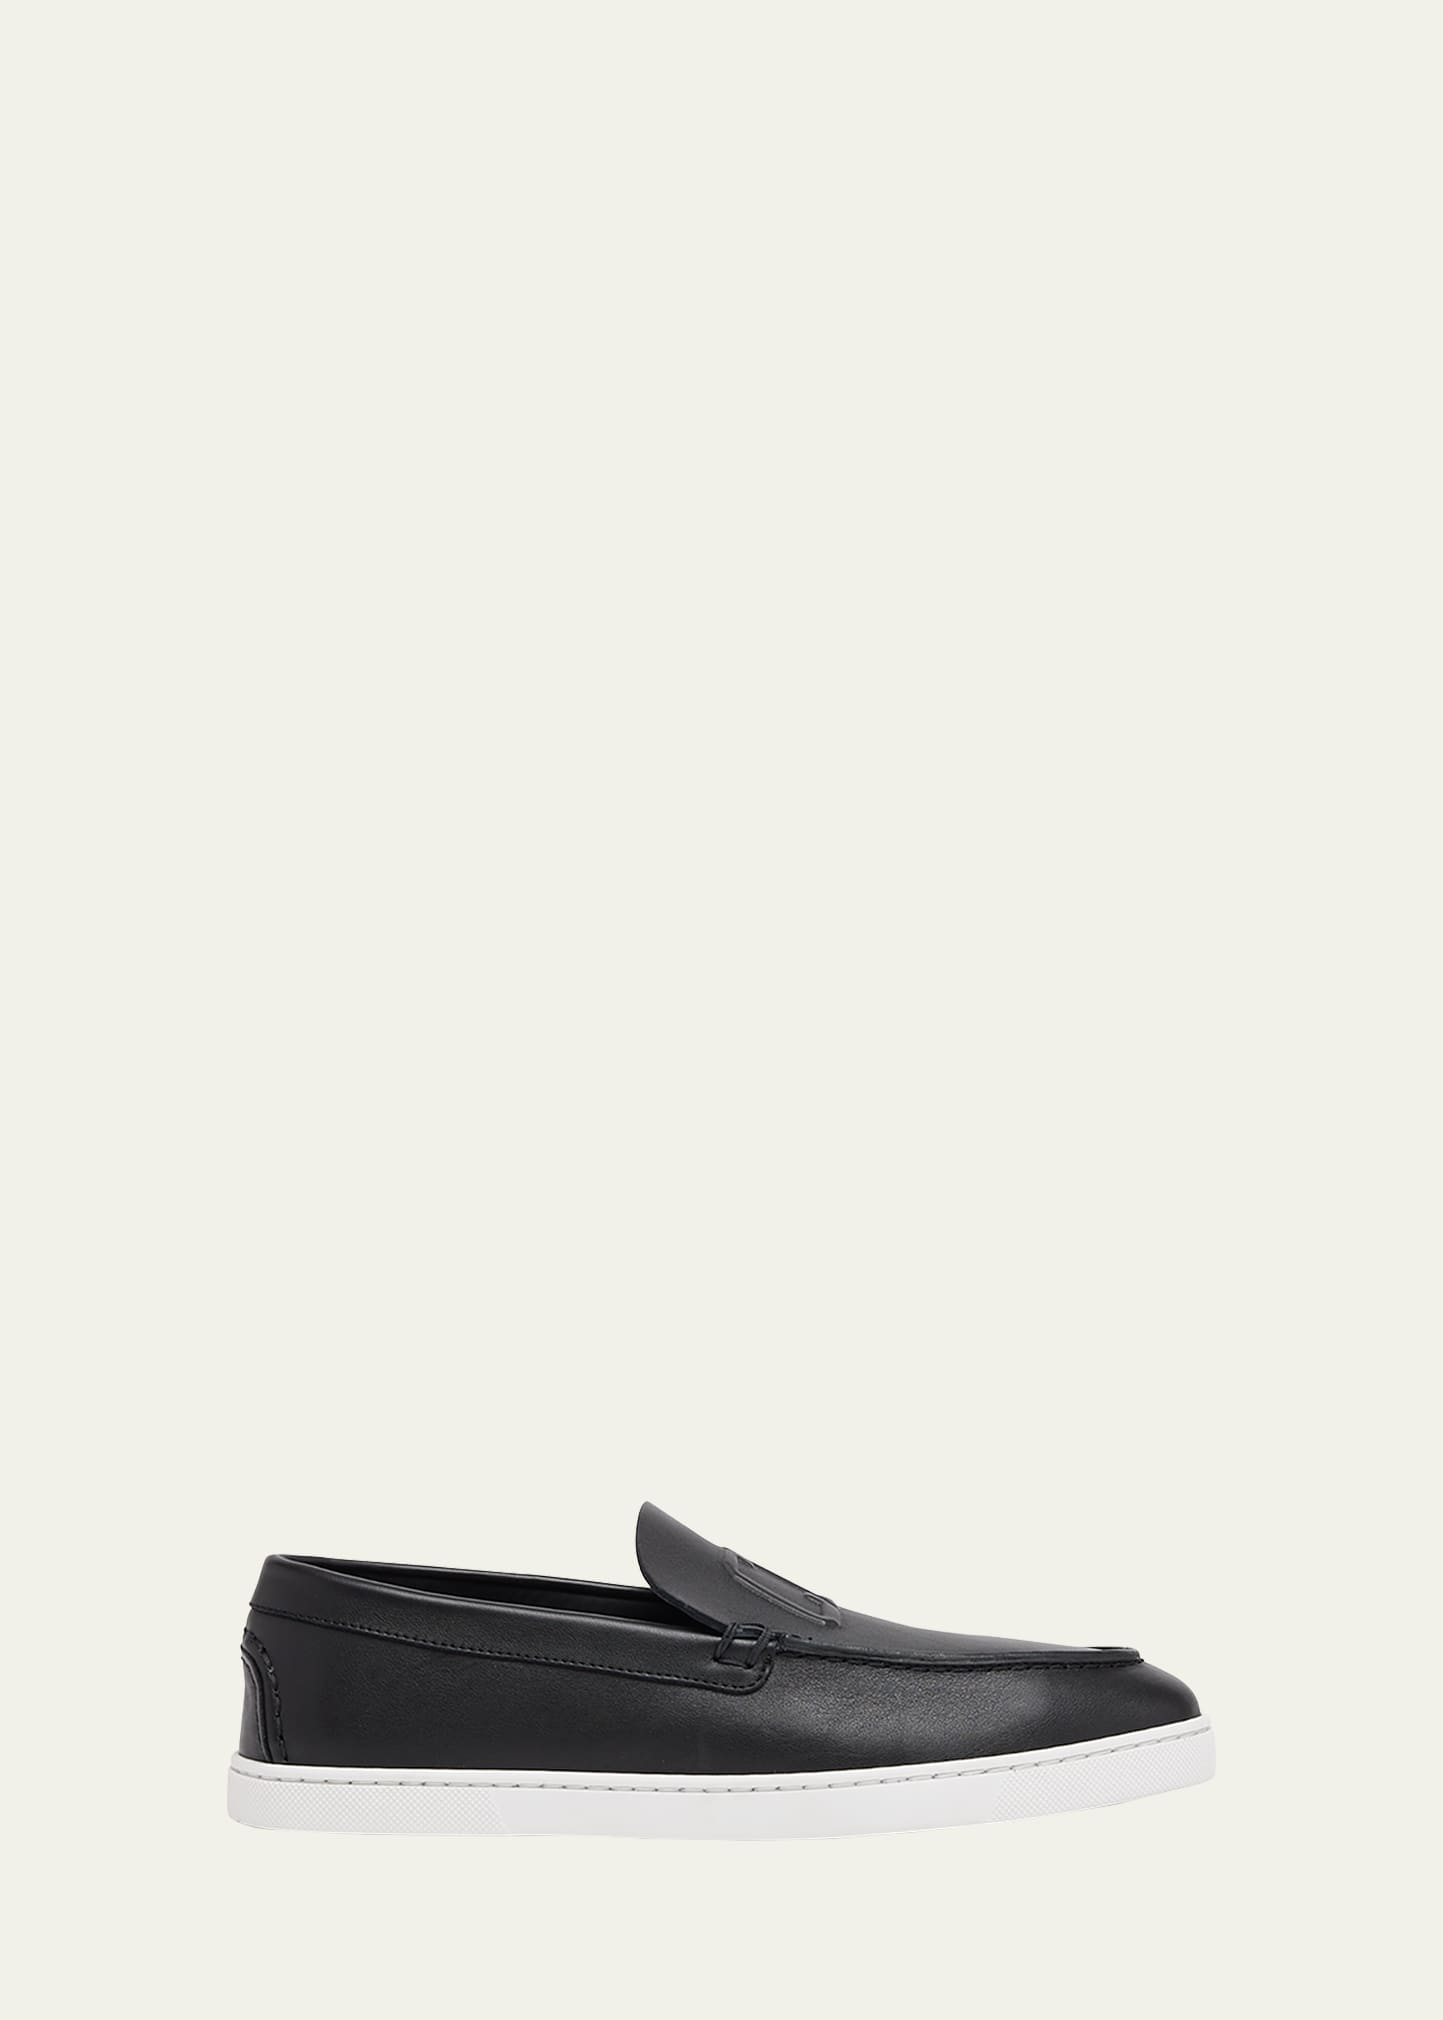 Christian Louboutin Men's Varsiboat Leather Boat Shoes In Black